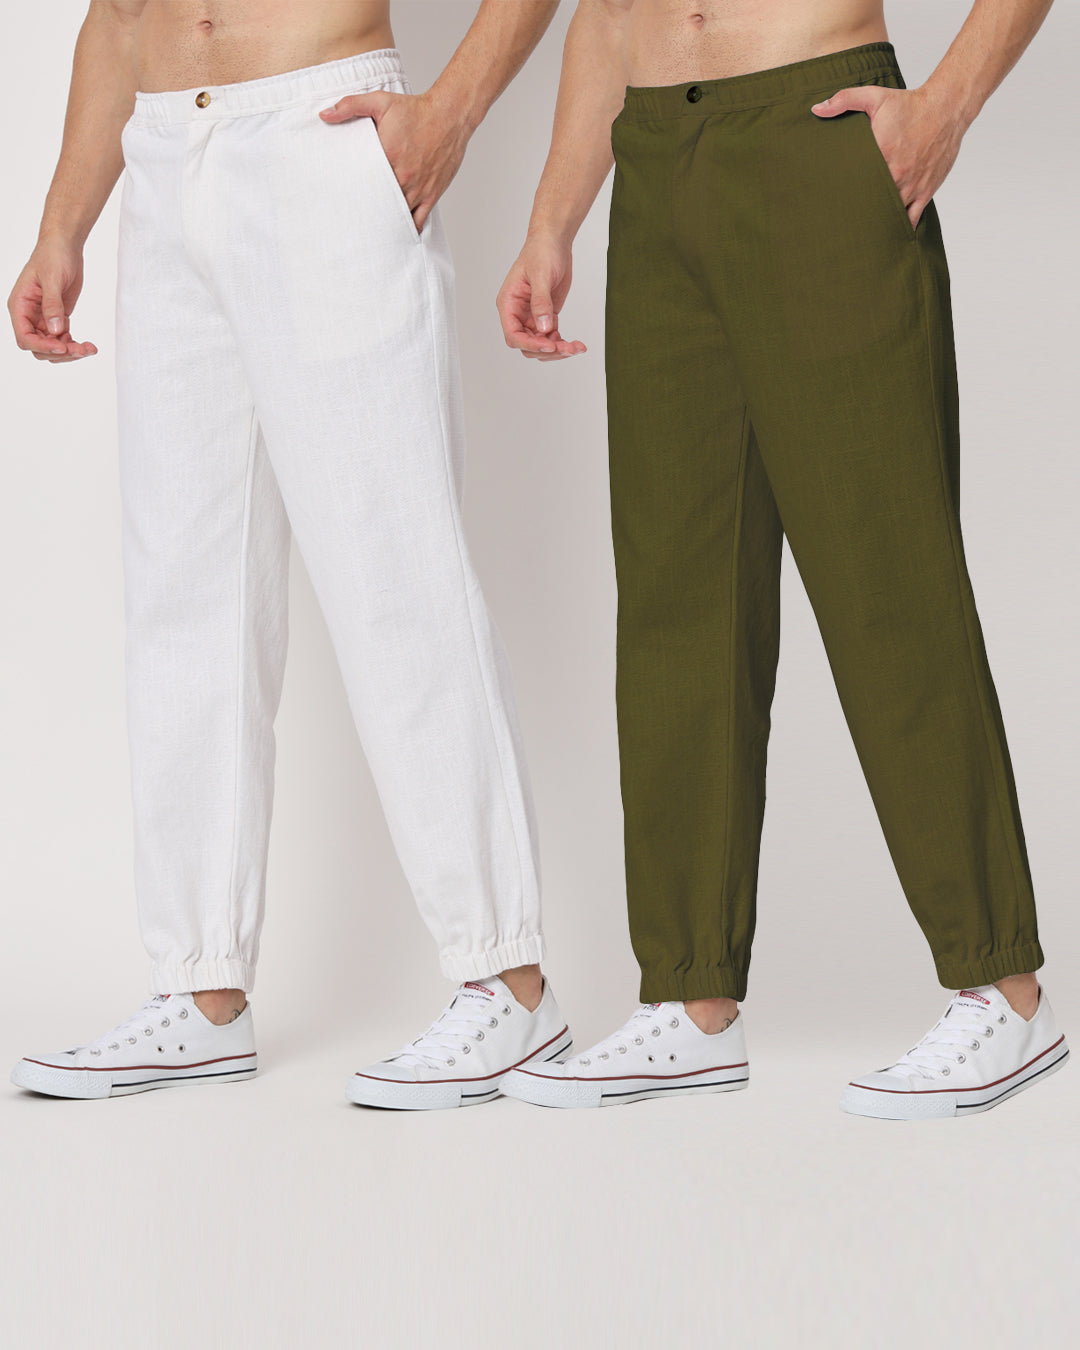 Combo: White & Olive Green Jog Men's Pants - Set of 2